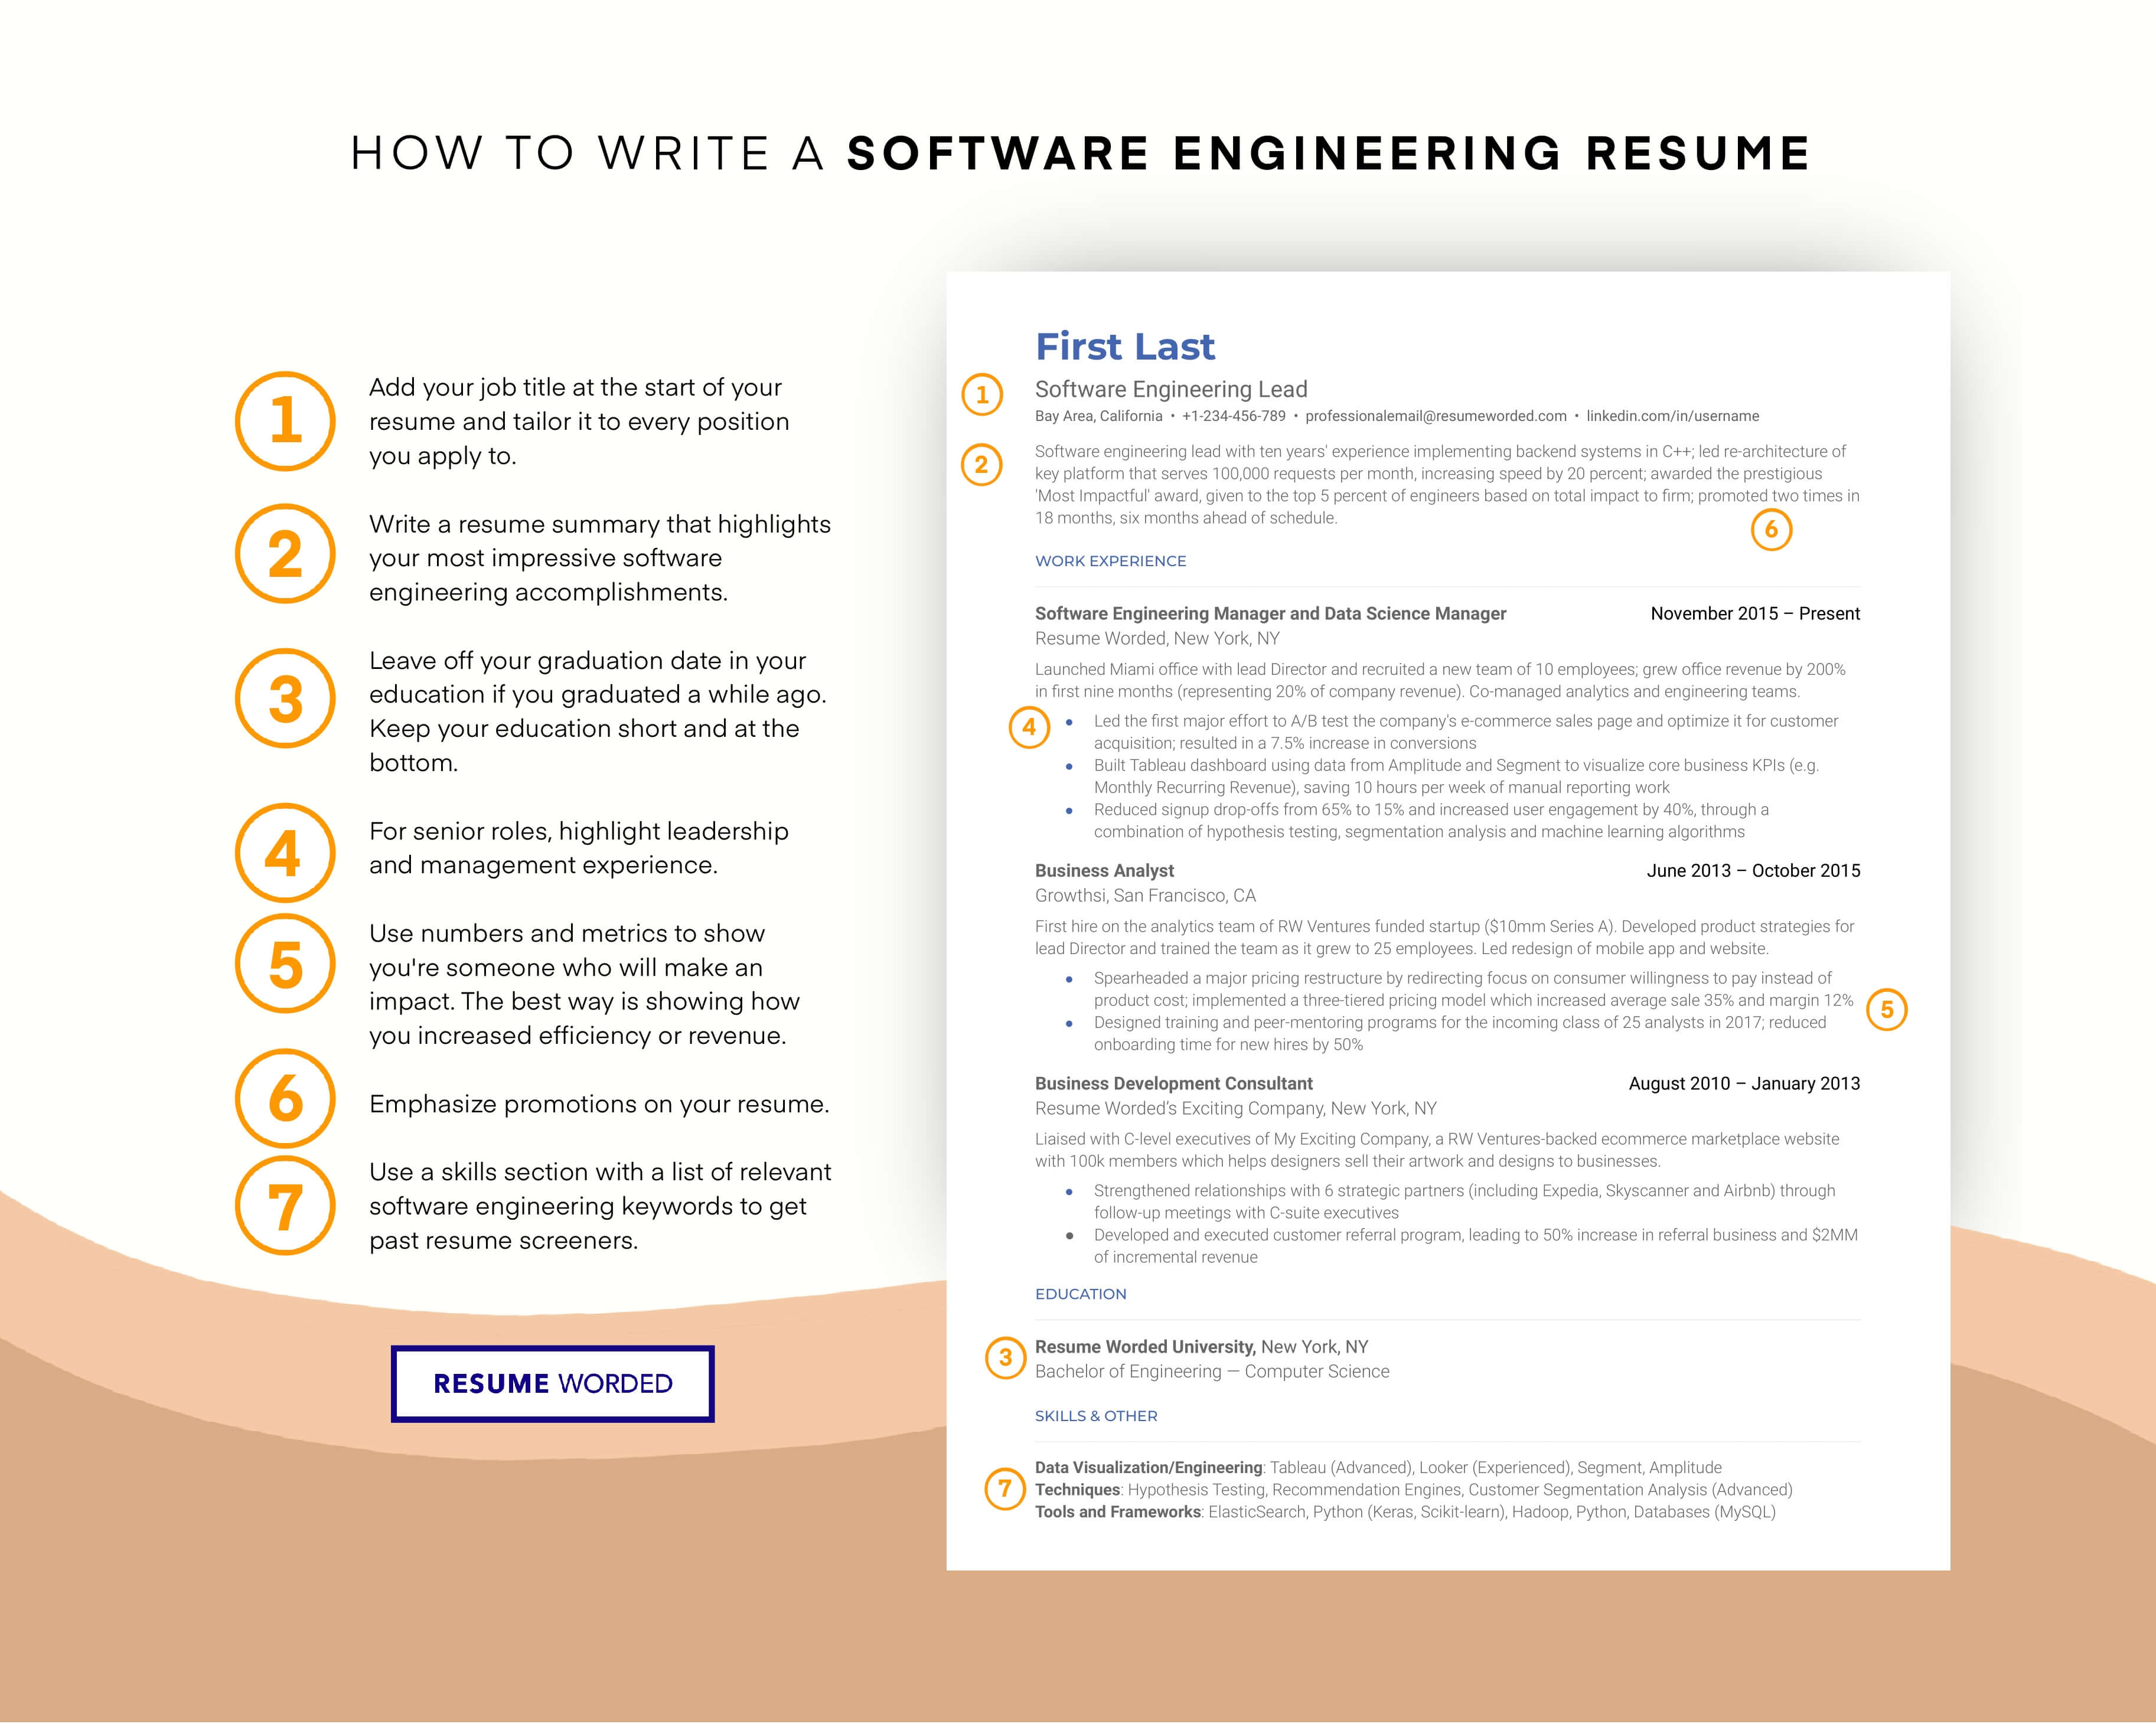 Highlight relevant software proficiency - Freelance Graphic Designer Resume